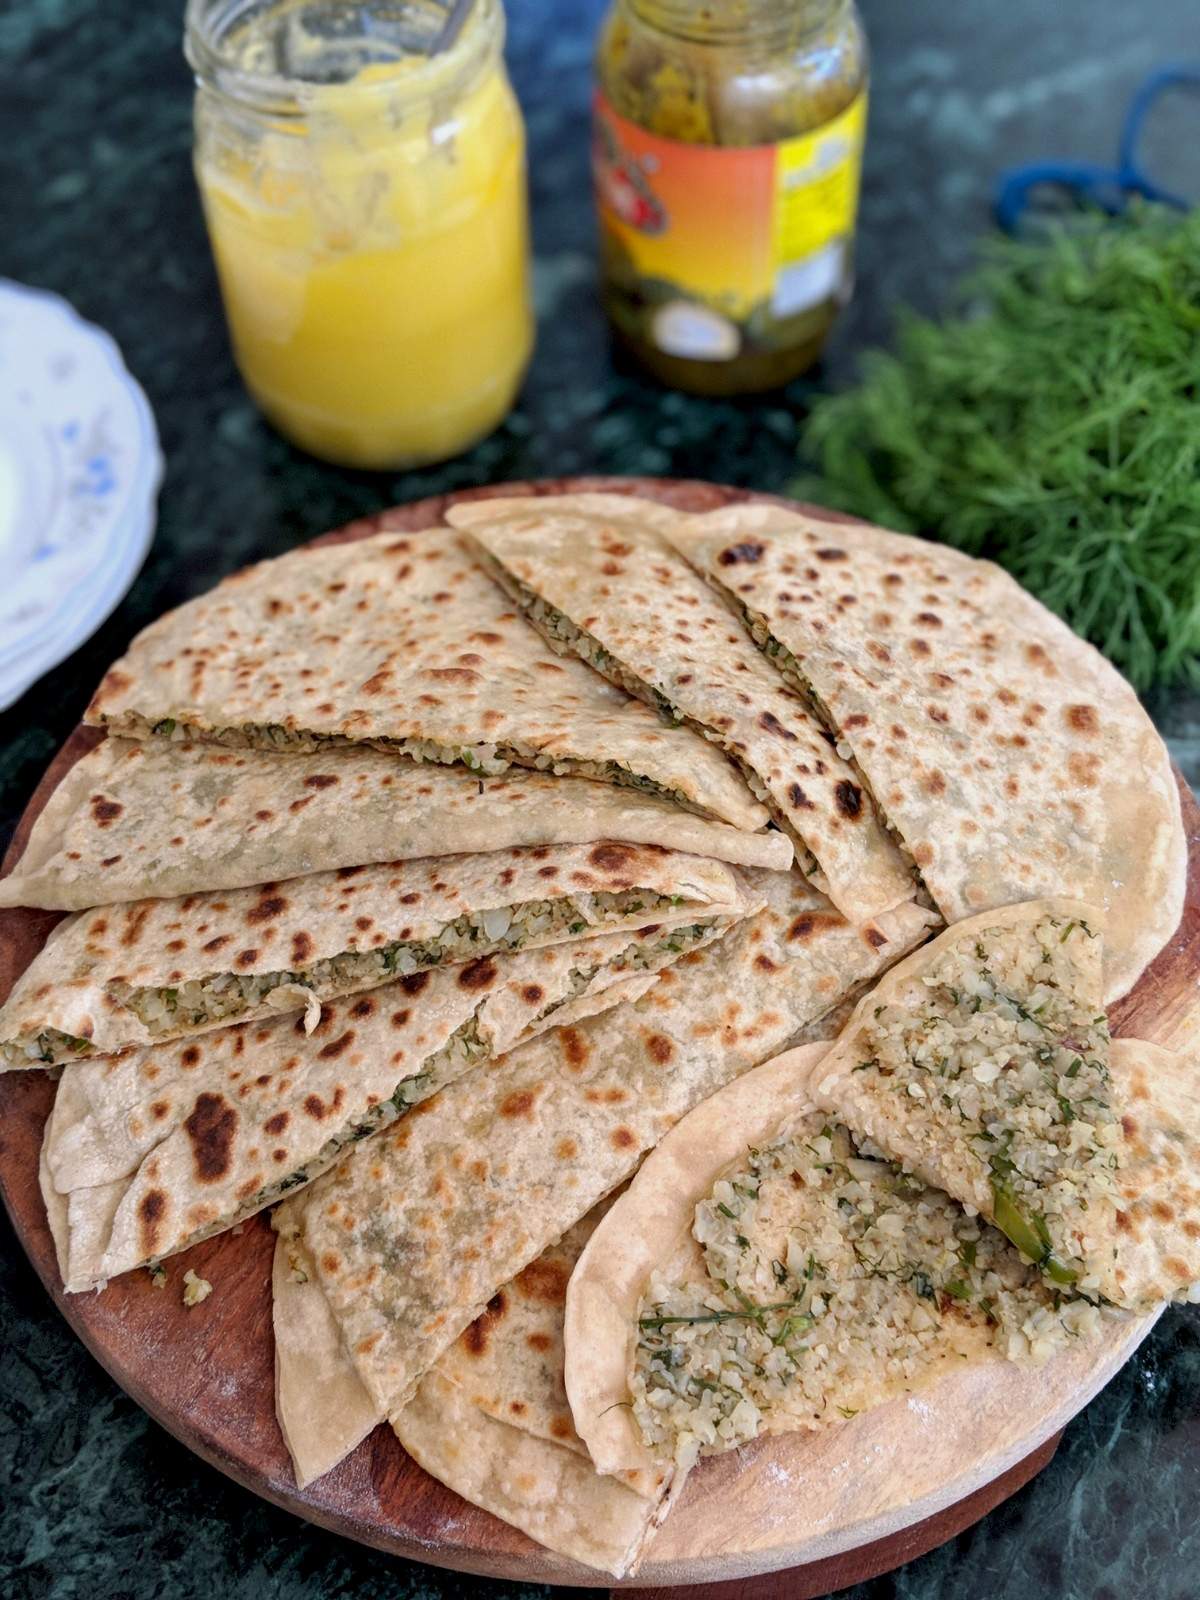 cauliflower parathas - gobhi paratha recipe with dill